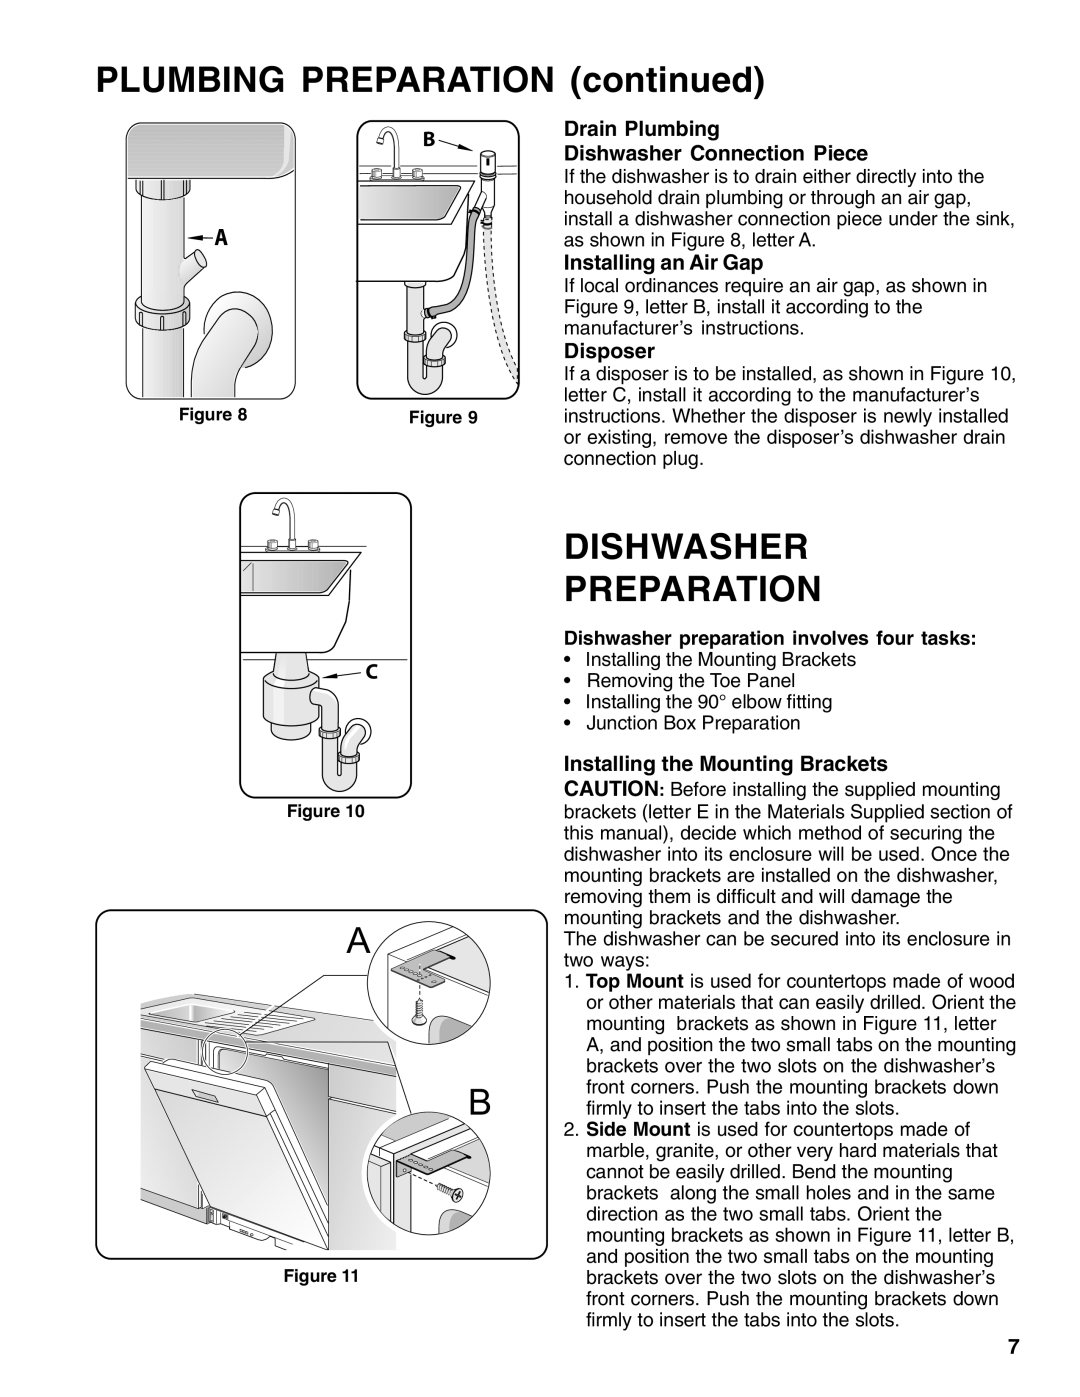 Thermador 9000039271 PLUMBING PREPARATION continued, Dishwasher Preparation, Drain Plumbing Dishwasher Connection Piece 